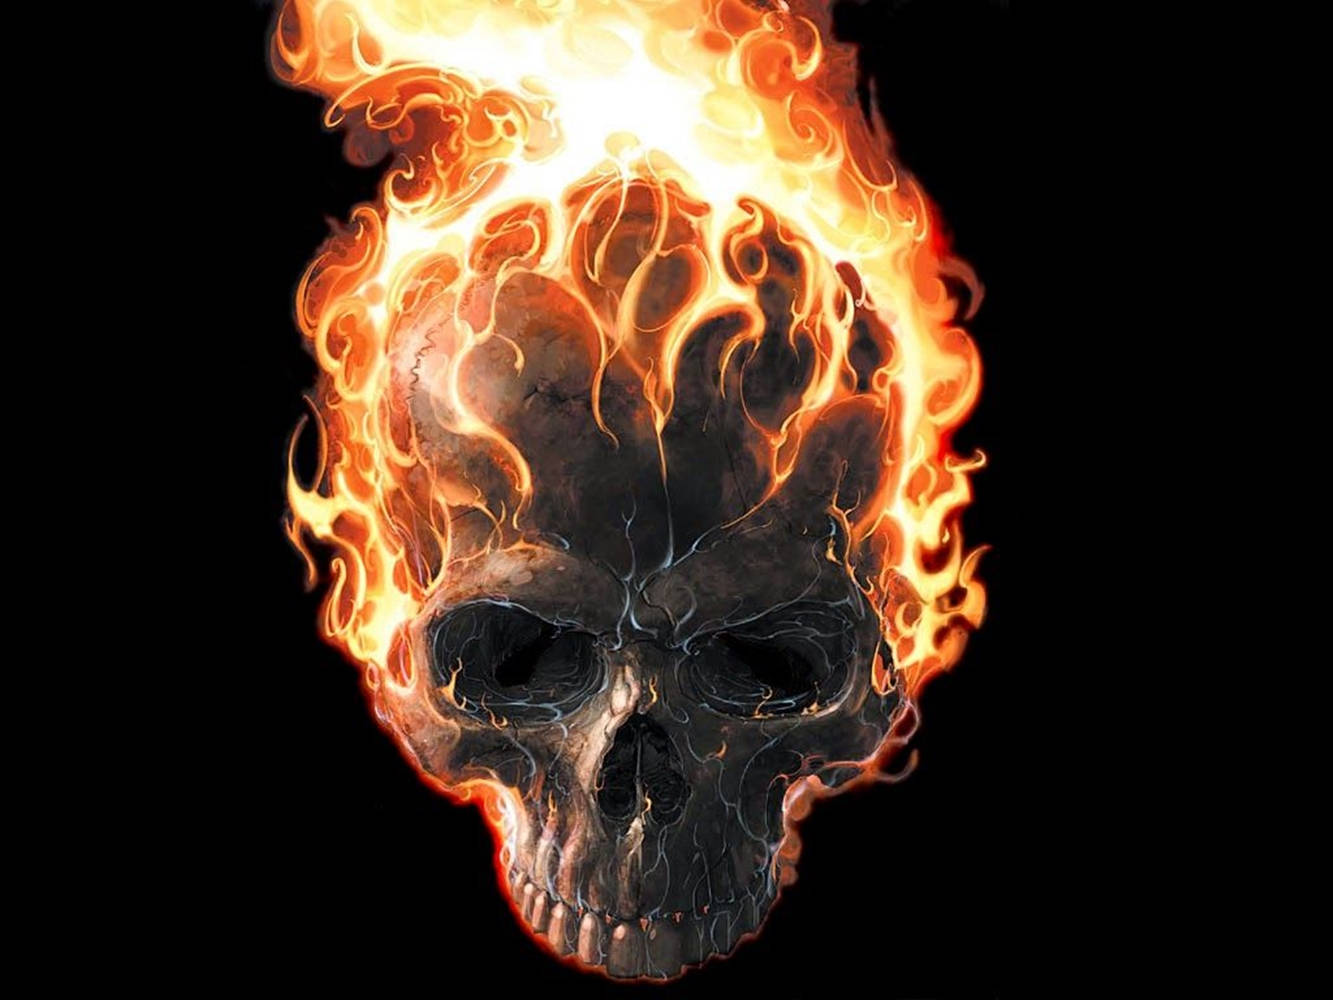 Cool 3d Ghost Skull On Fire Wallpaper